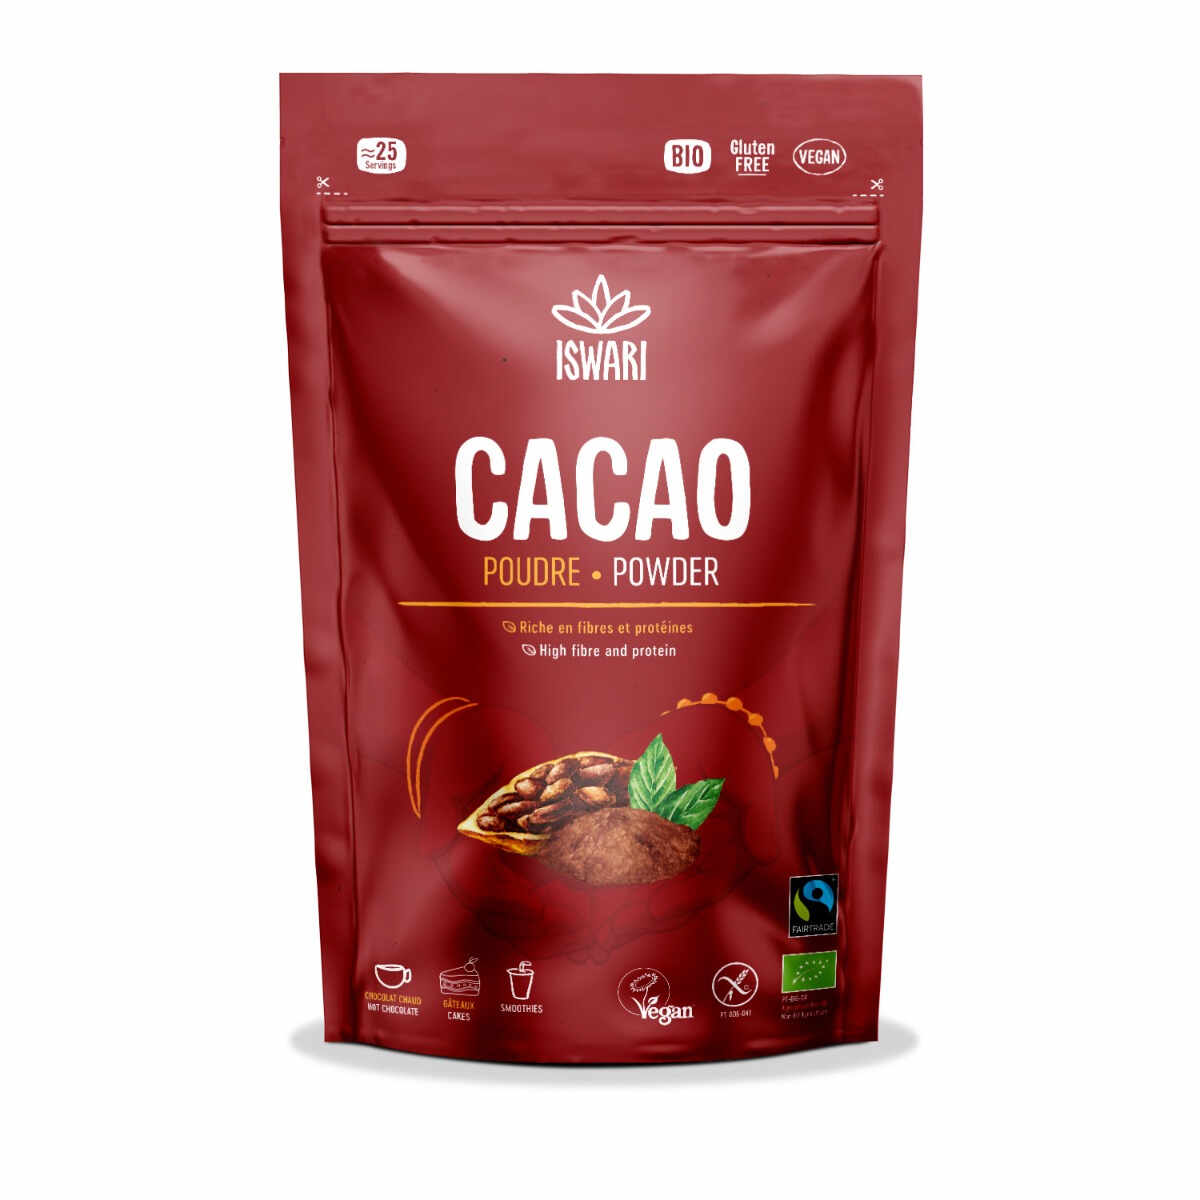 Pulbere de cacao cruda bio si fairtrade, 125g, Iswari